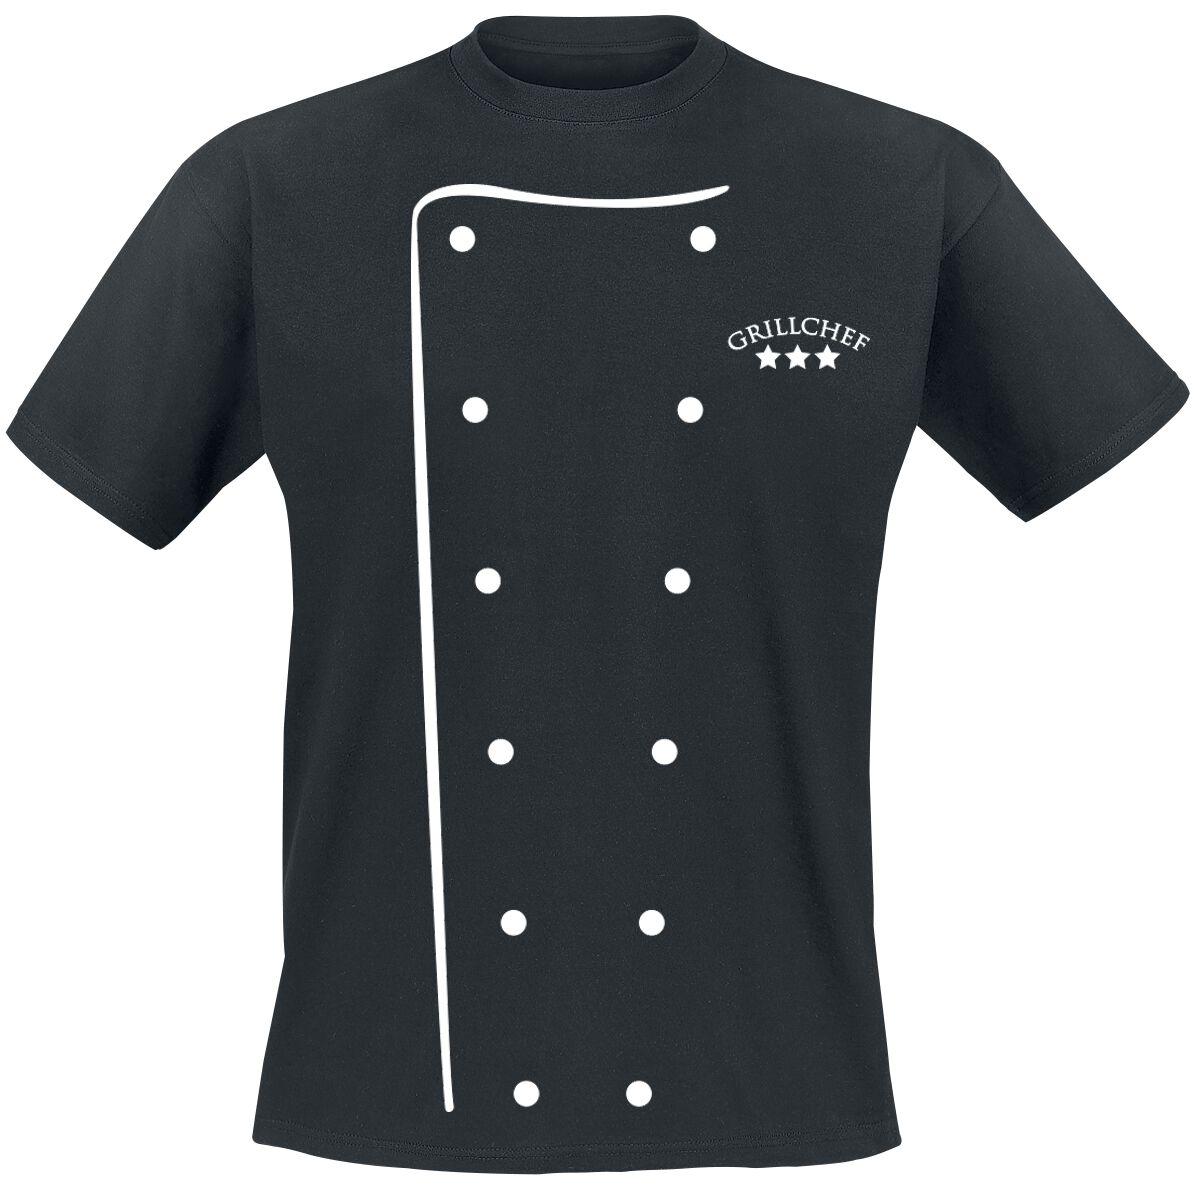 Food Grillchef T-Shirt schwarz in 4XL